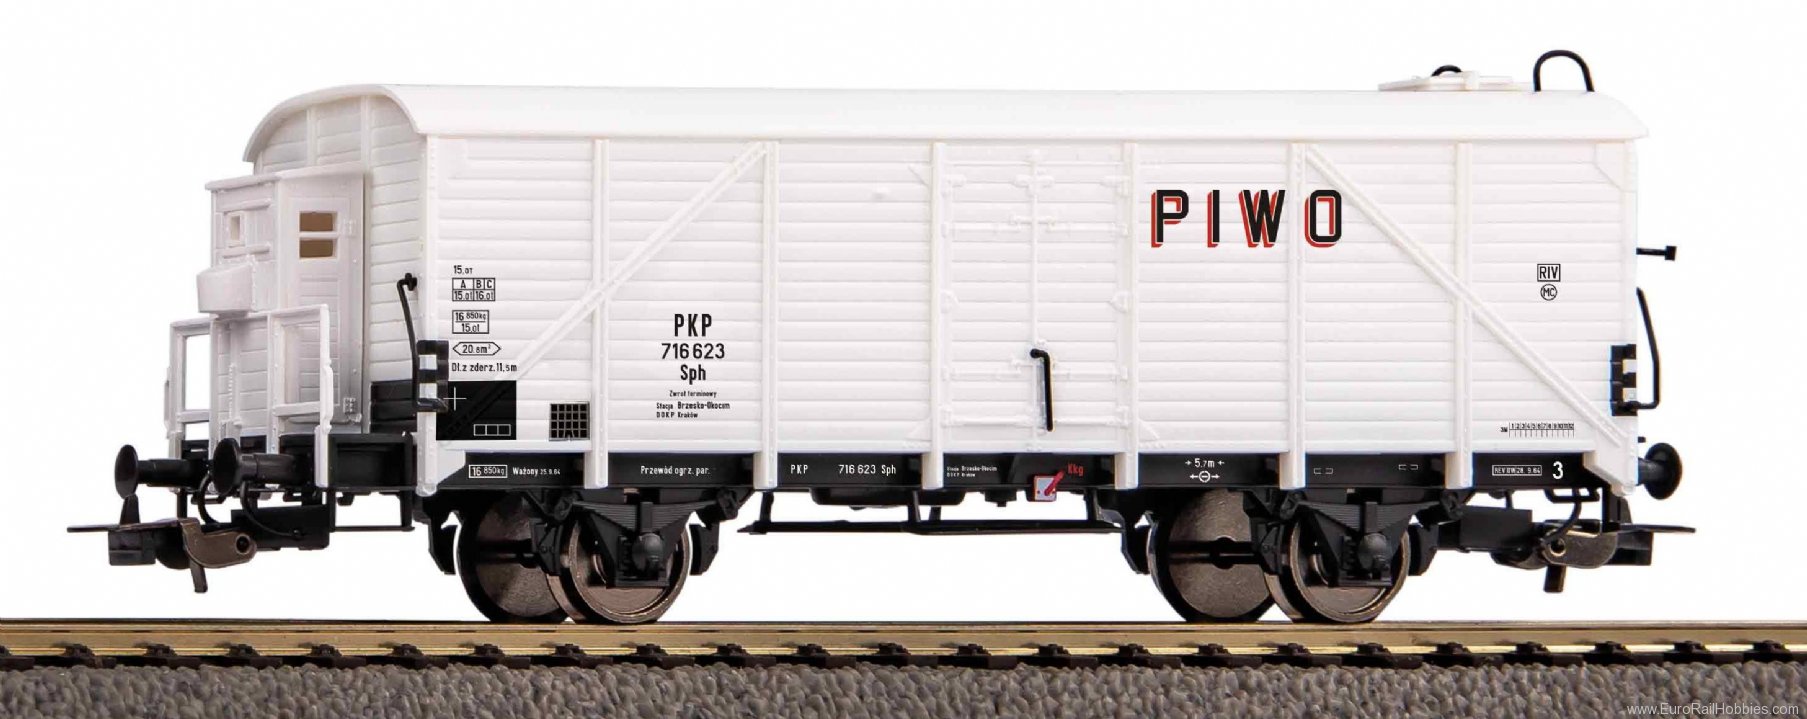 Piko 24514 Refrigerated wagon ex Berlin PKP III (Piko Cl